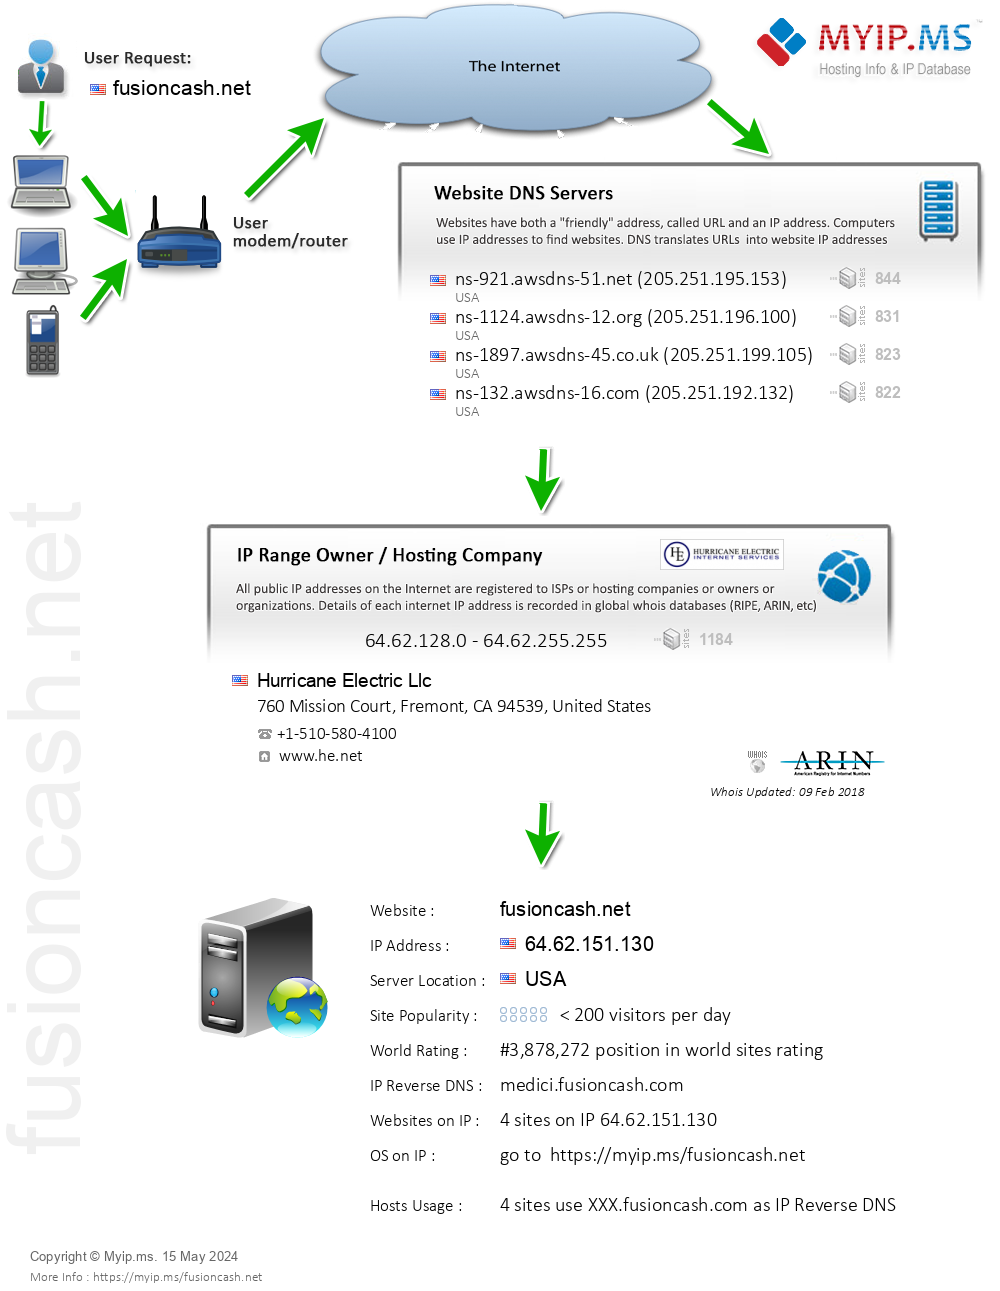 Fusioncash.net - Website Hosting Visual IP Diagram